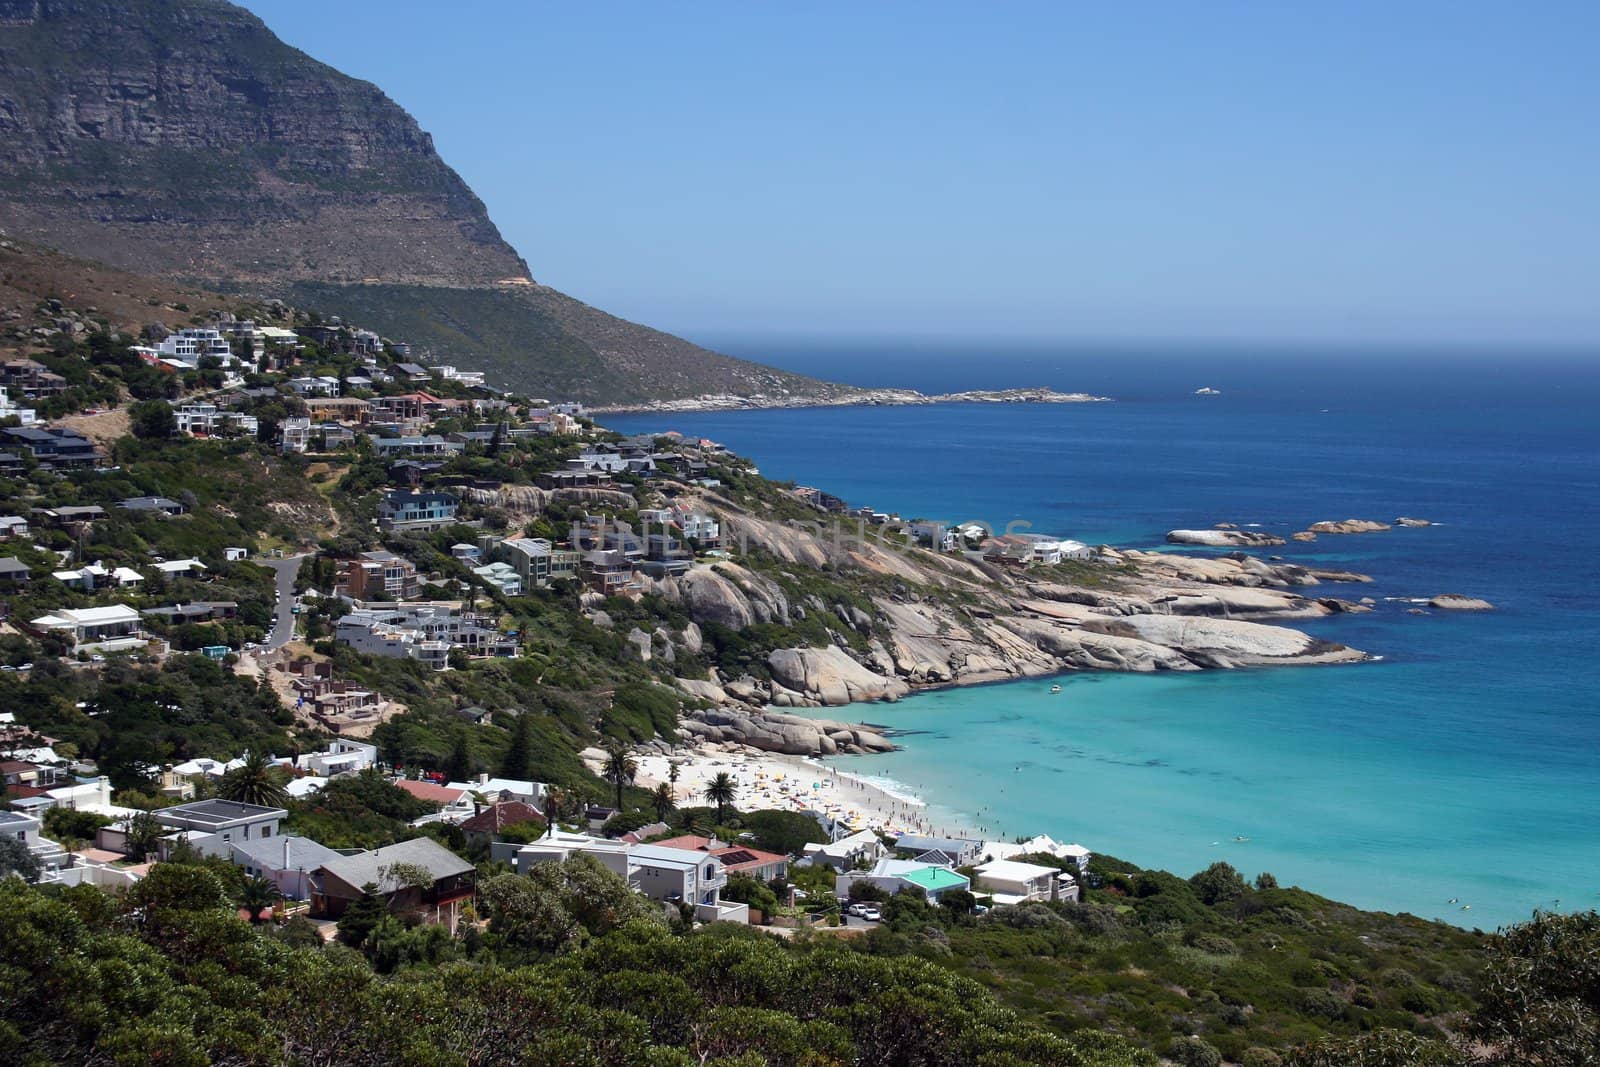 Campsbay, a popular tourism destination along the coastline of South Africa